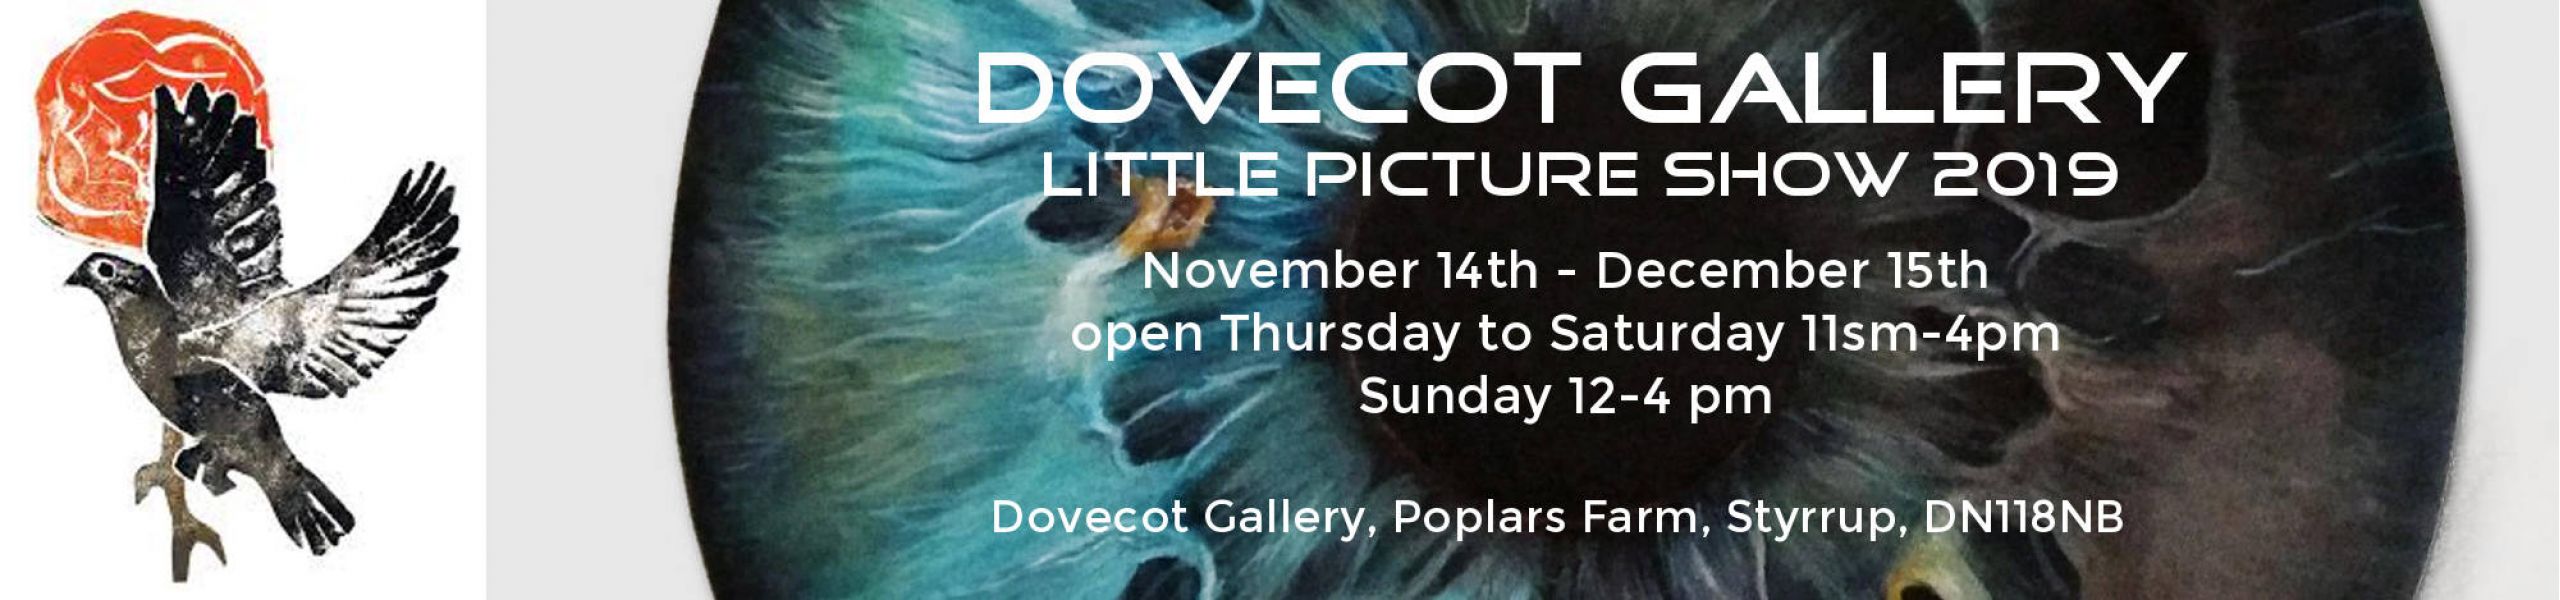 Dovecot Gallery - Doncaster- Elisa Neri